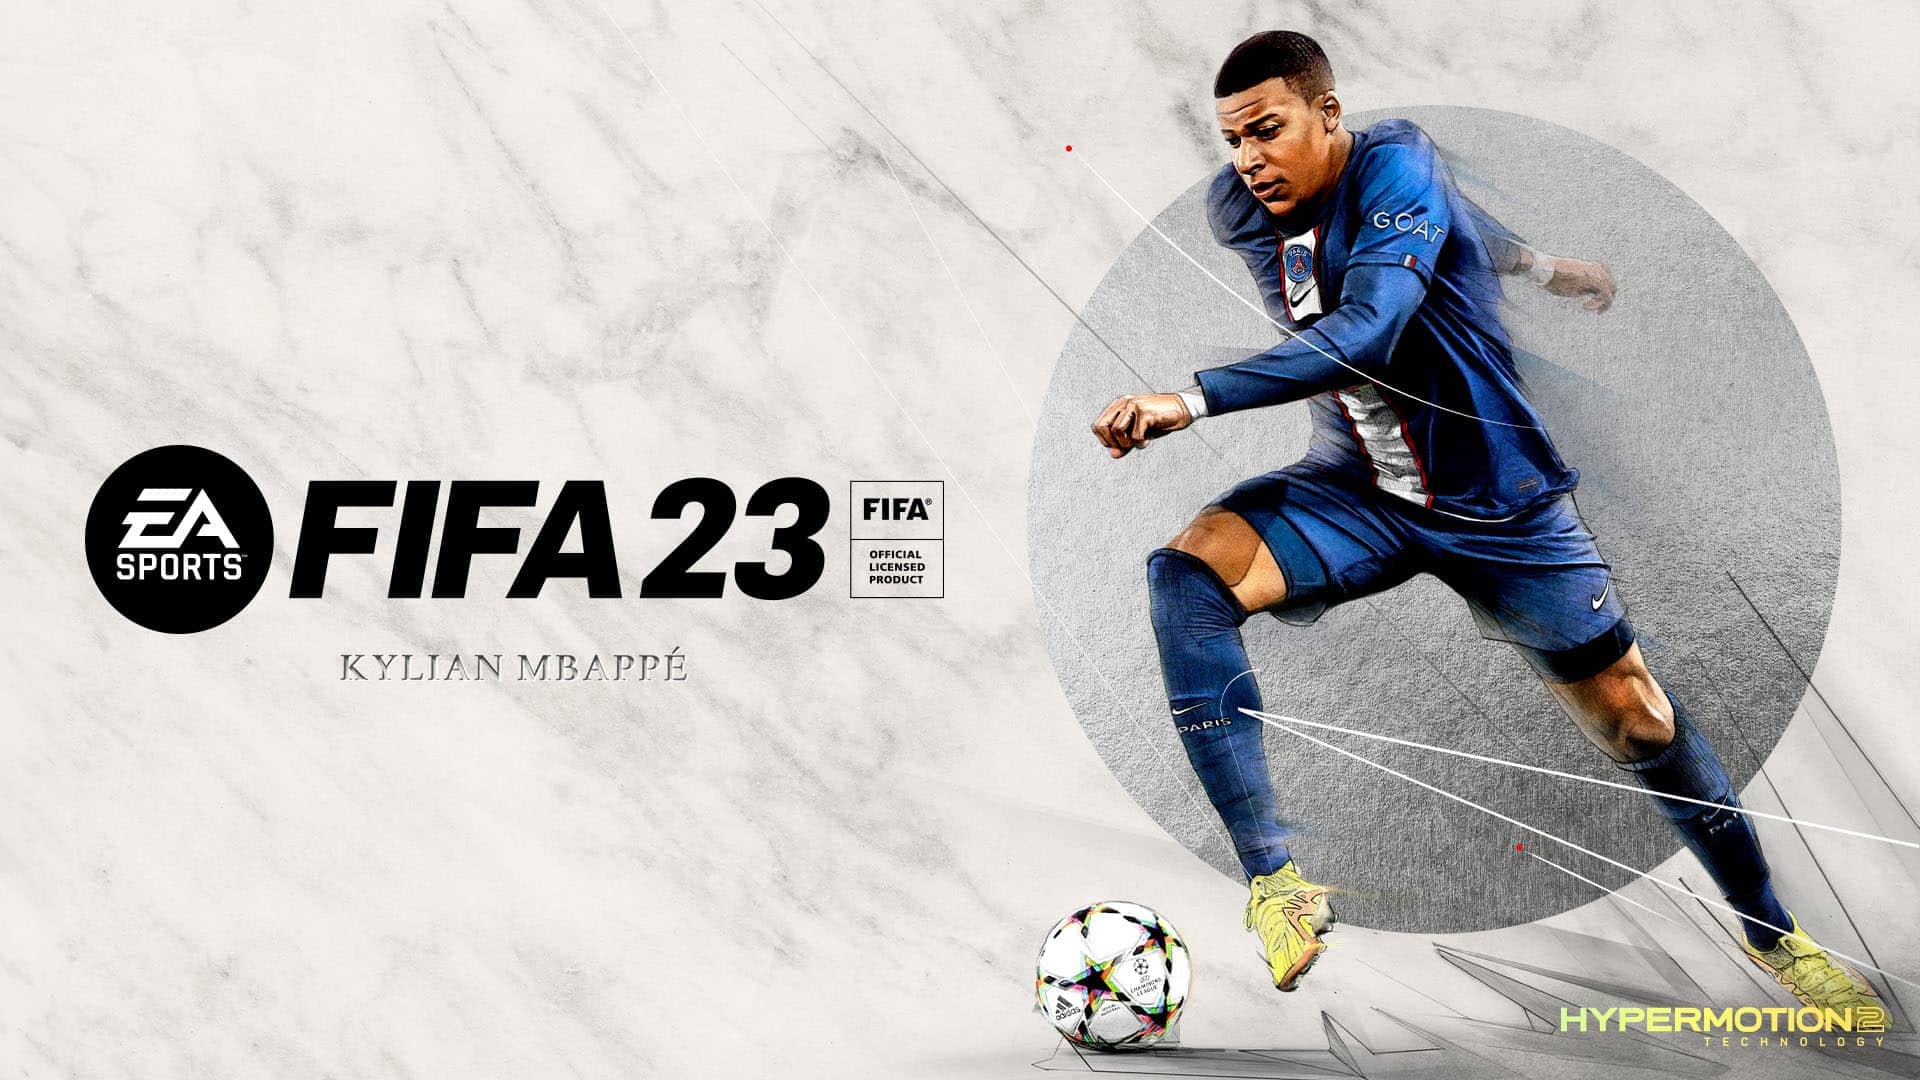 Ea Sports Unveils Fifa 23 Cover Athletes Kylian Mbappé And Sam Kerr